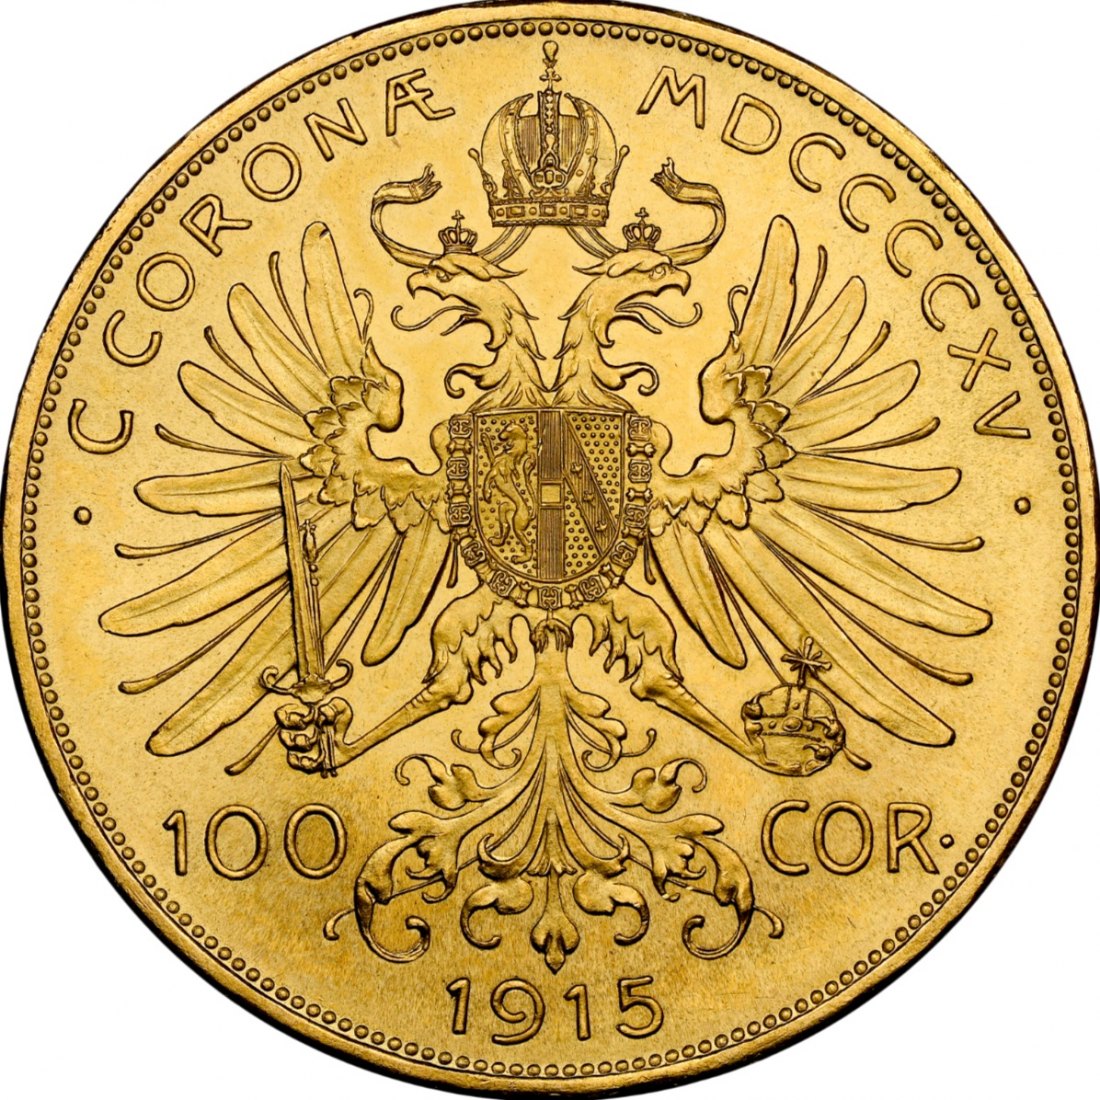  Österreich 100 Goldkronen 1915 Restrike | NGC MS 67 | Franz Joseph I.   